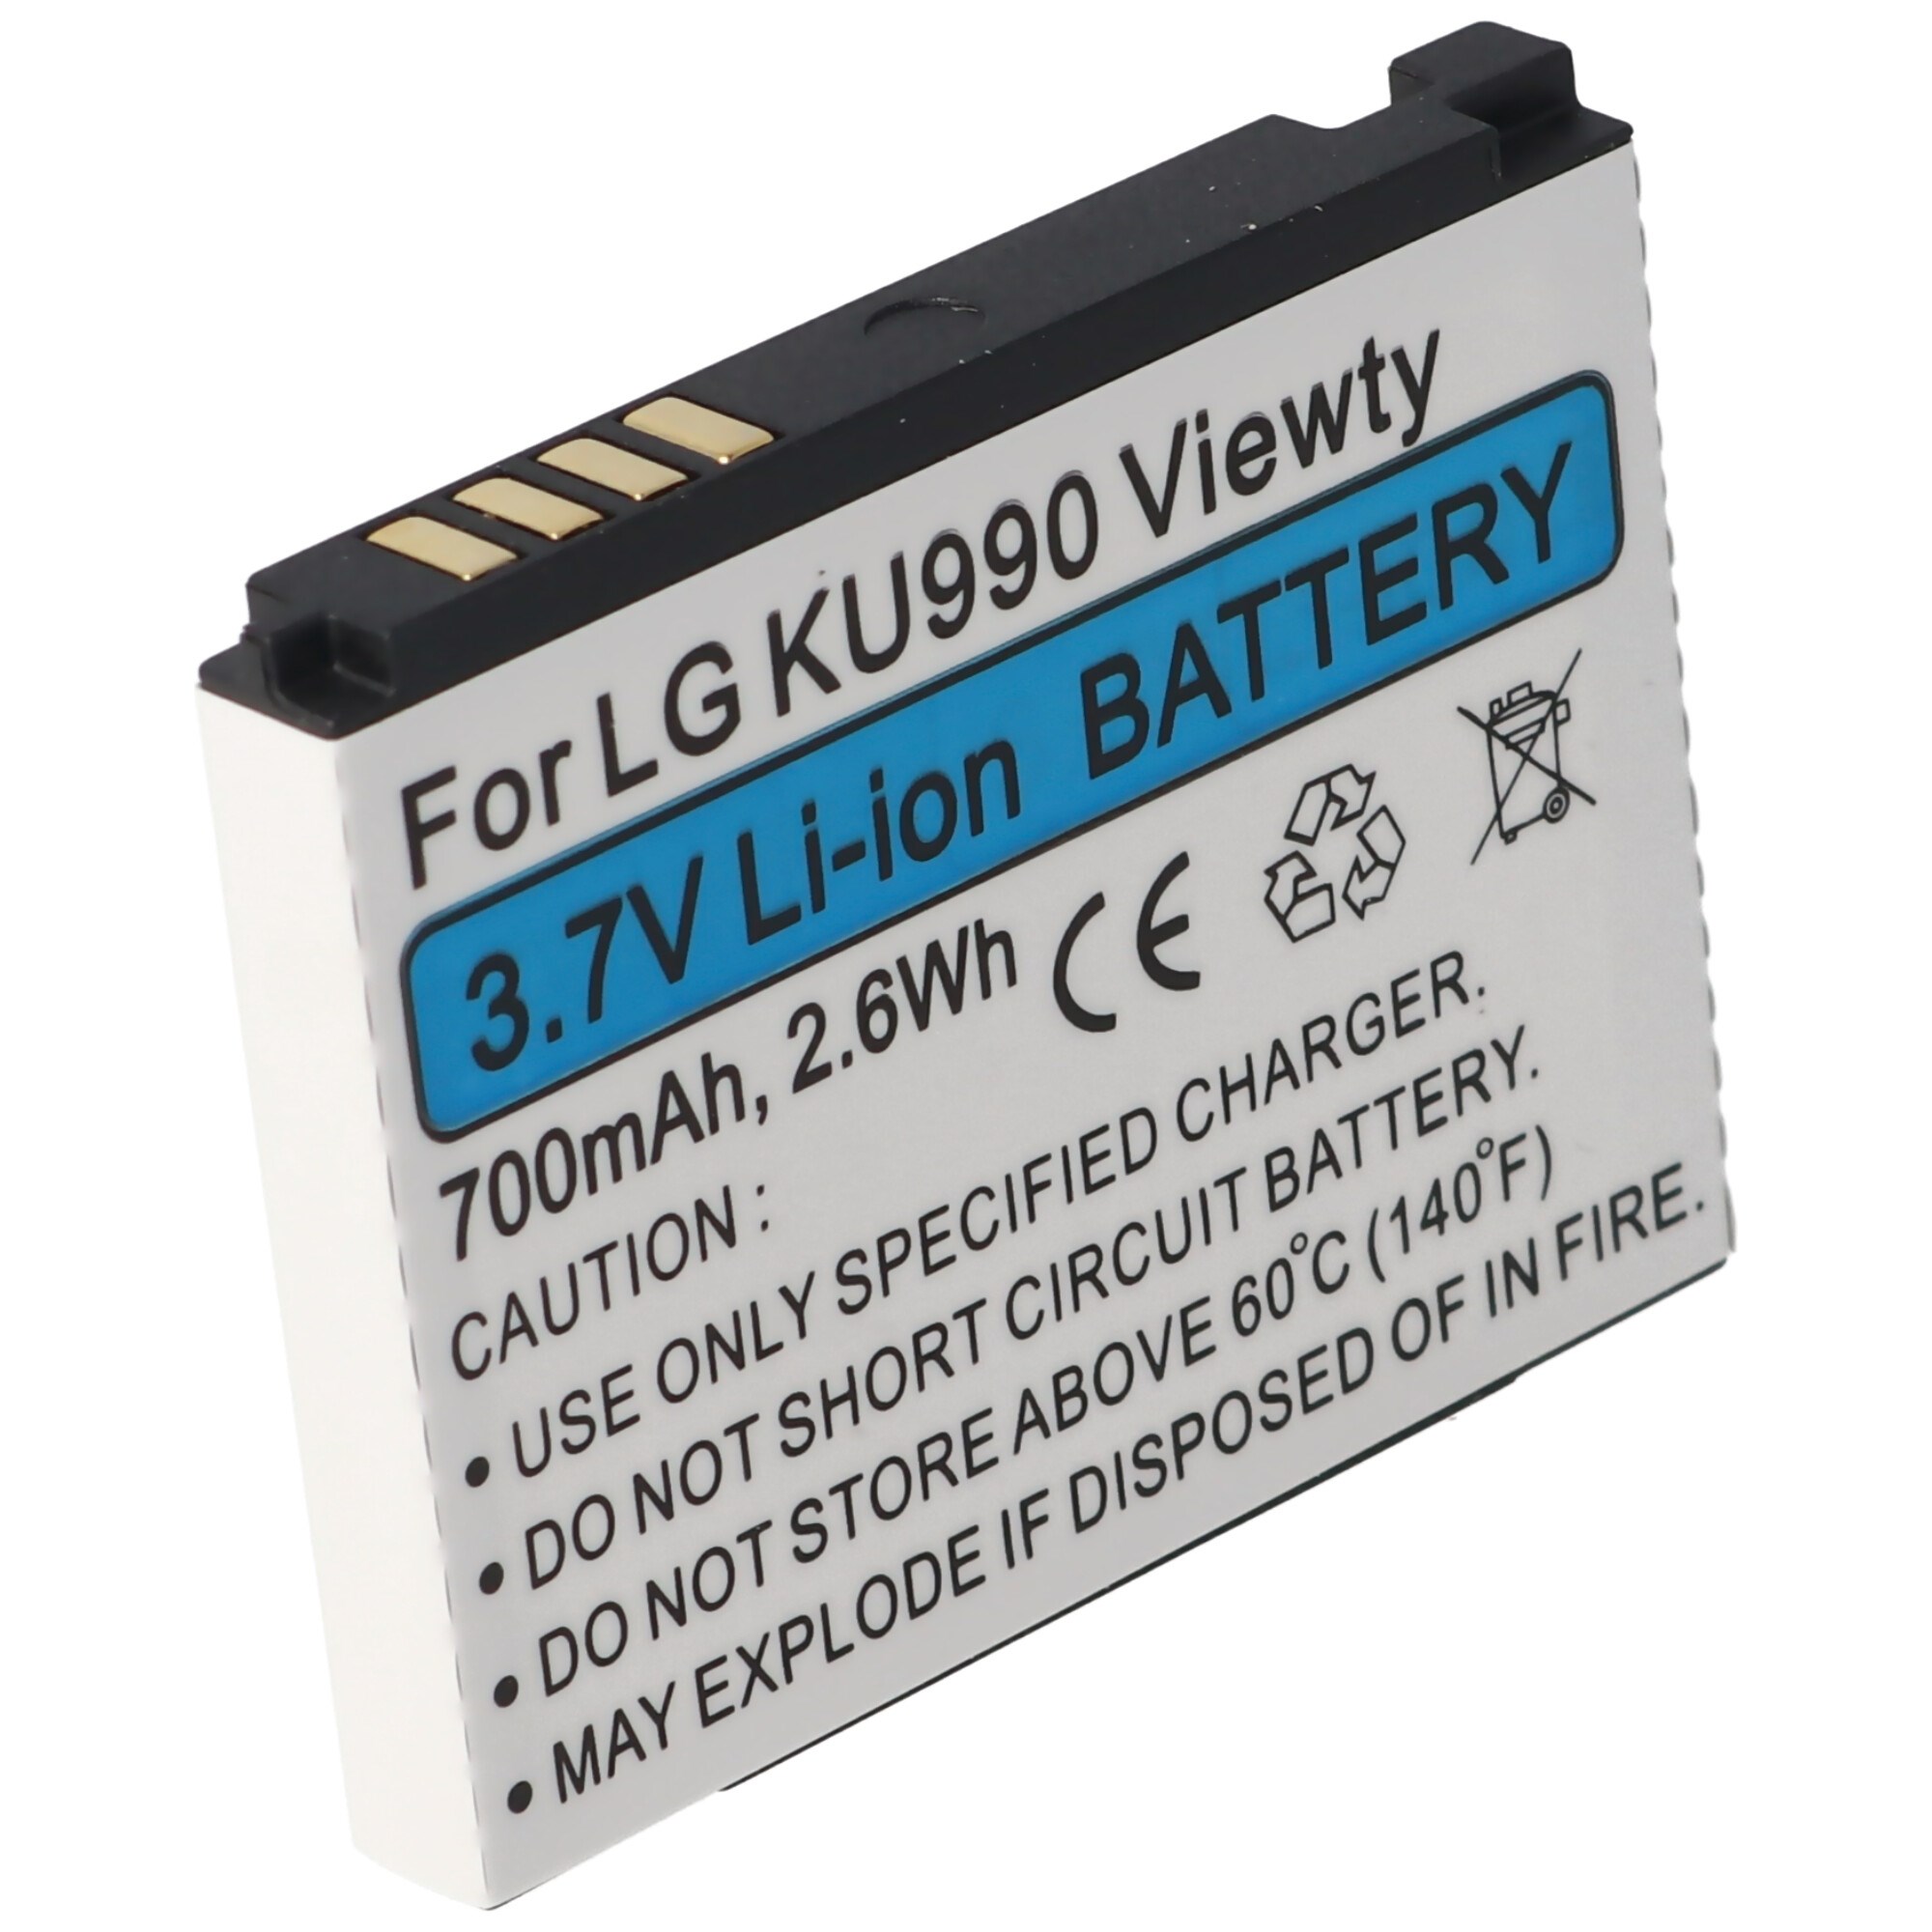 LG KU990 Viewty, HB620T, Li-ion, 3.7V, 700mAh, 2.6Wh için uygun pil